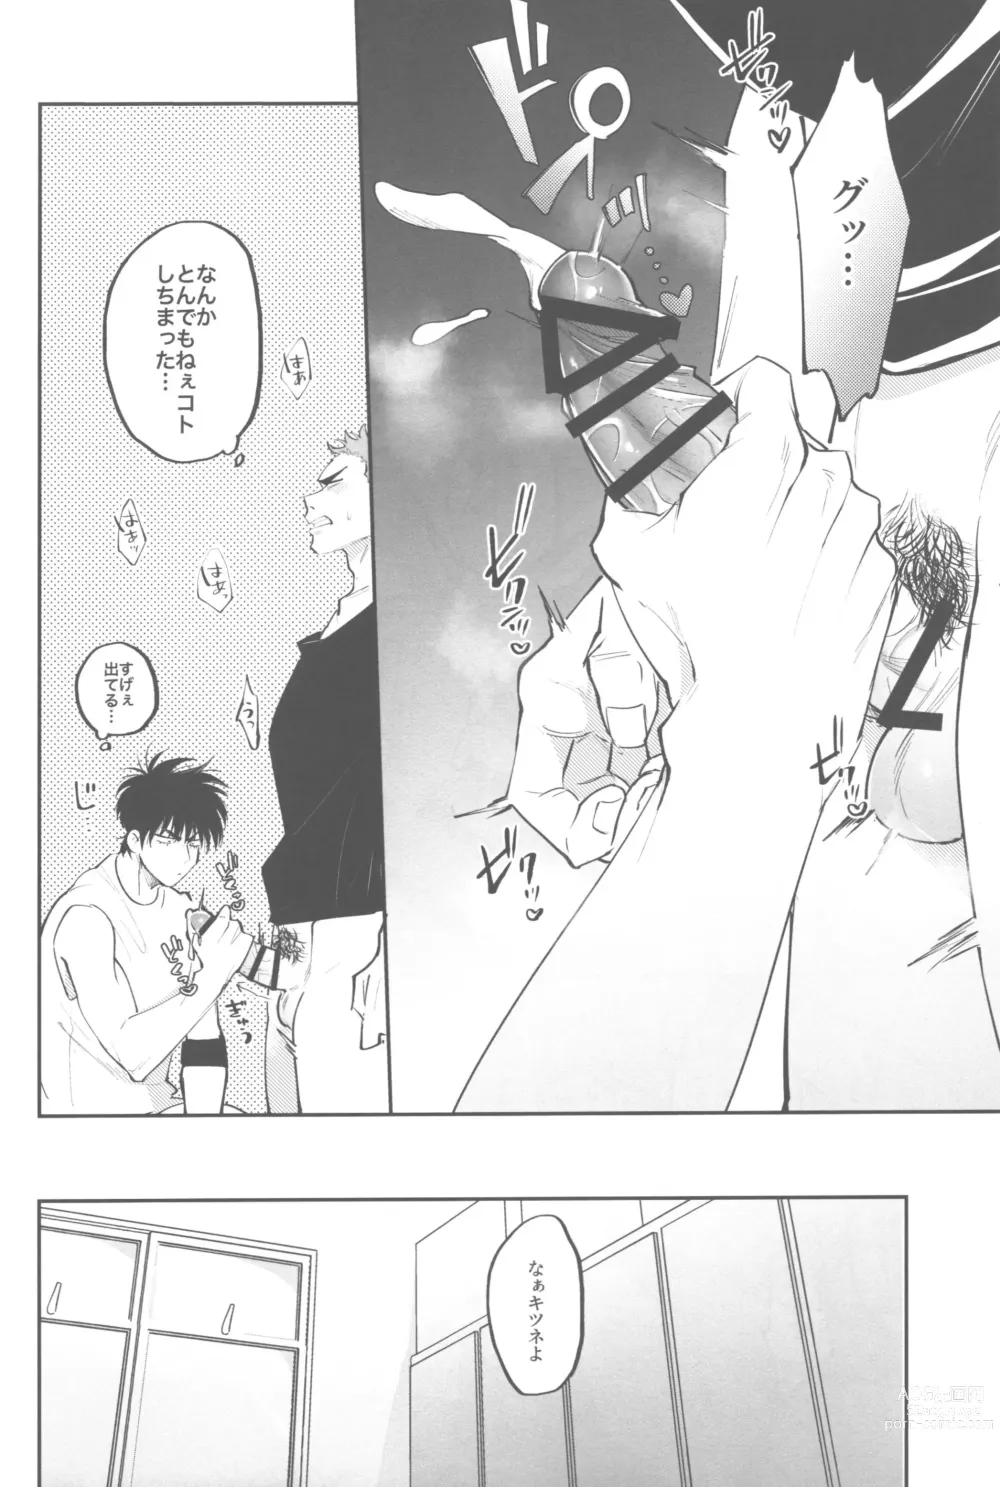 Page 25 of doujinshi Shohoku Kumasaki Rendezvous